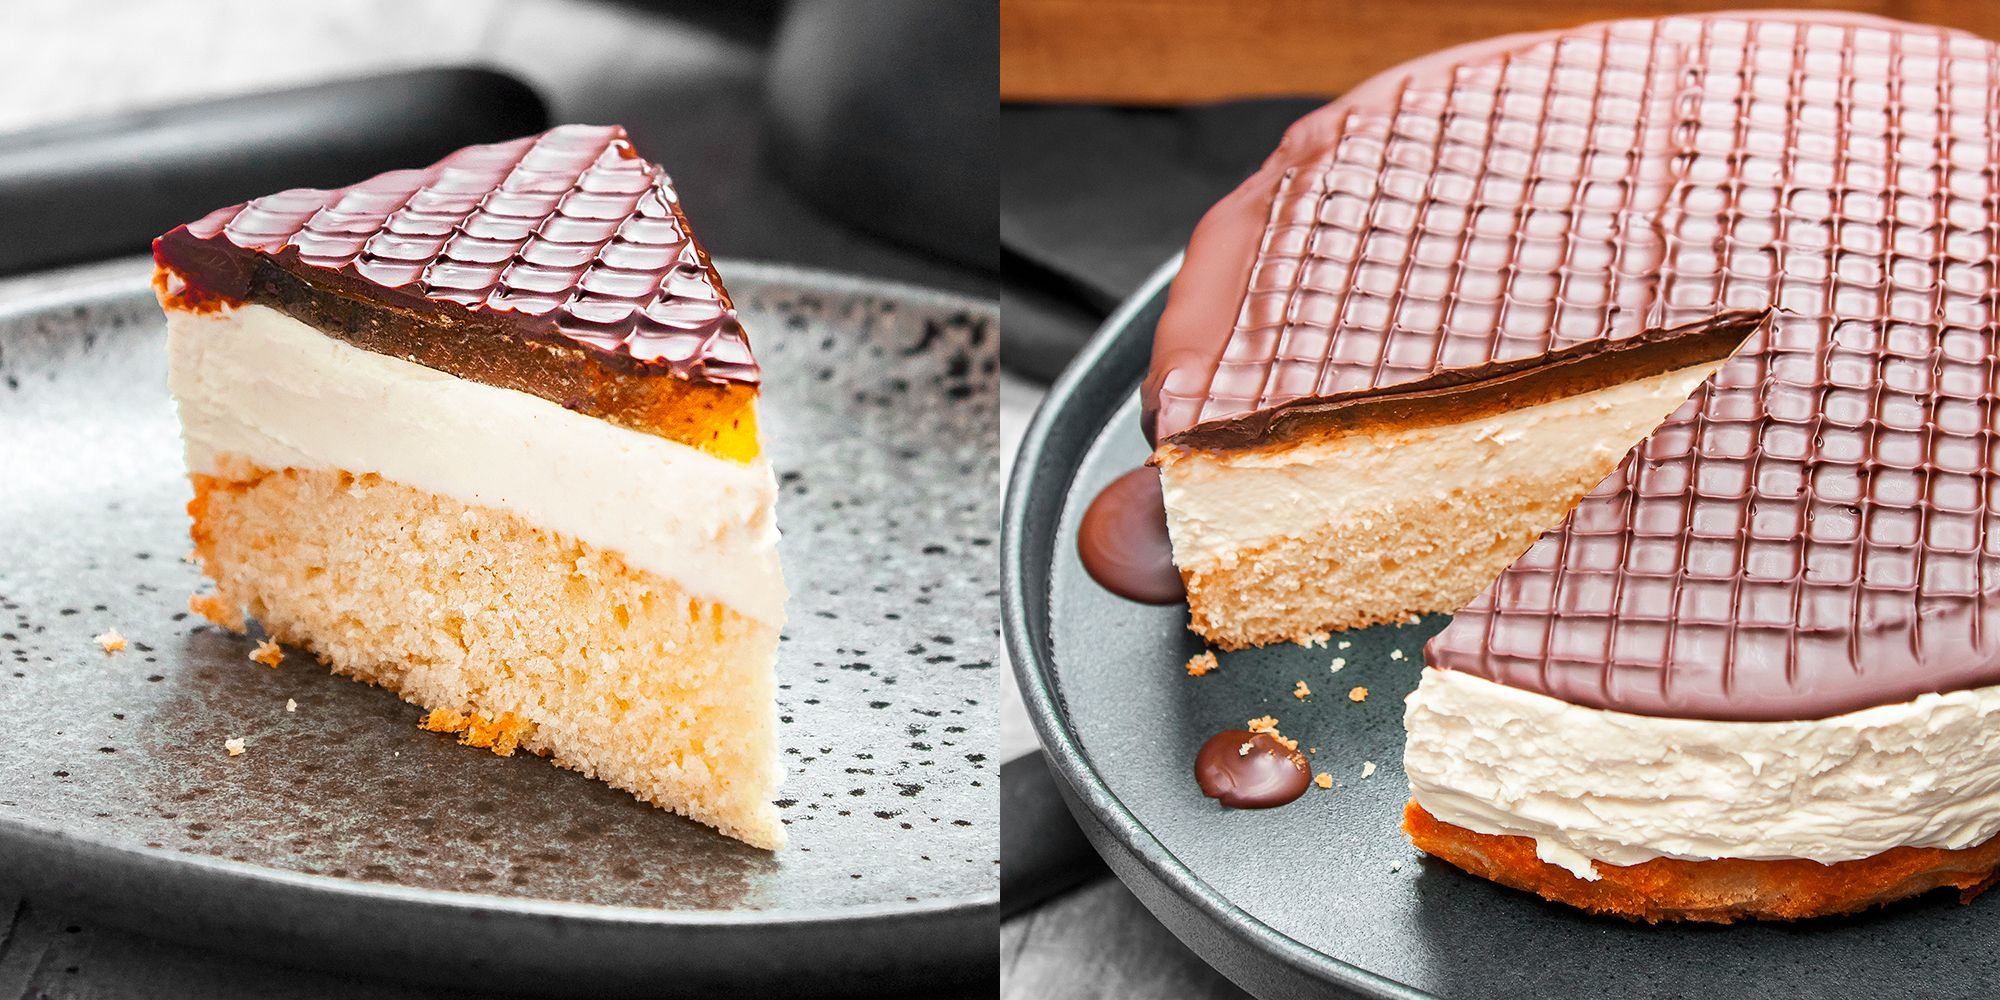 How To Make An Awesome Jaffa Cake Cake — Icing Insight